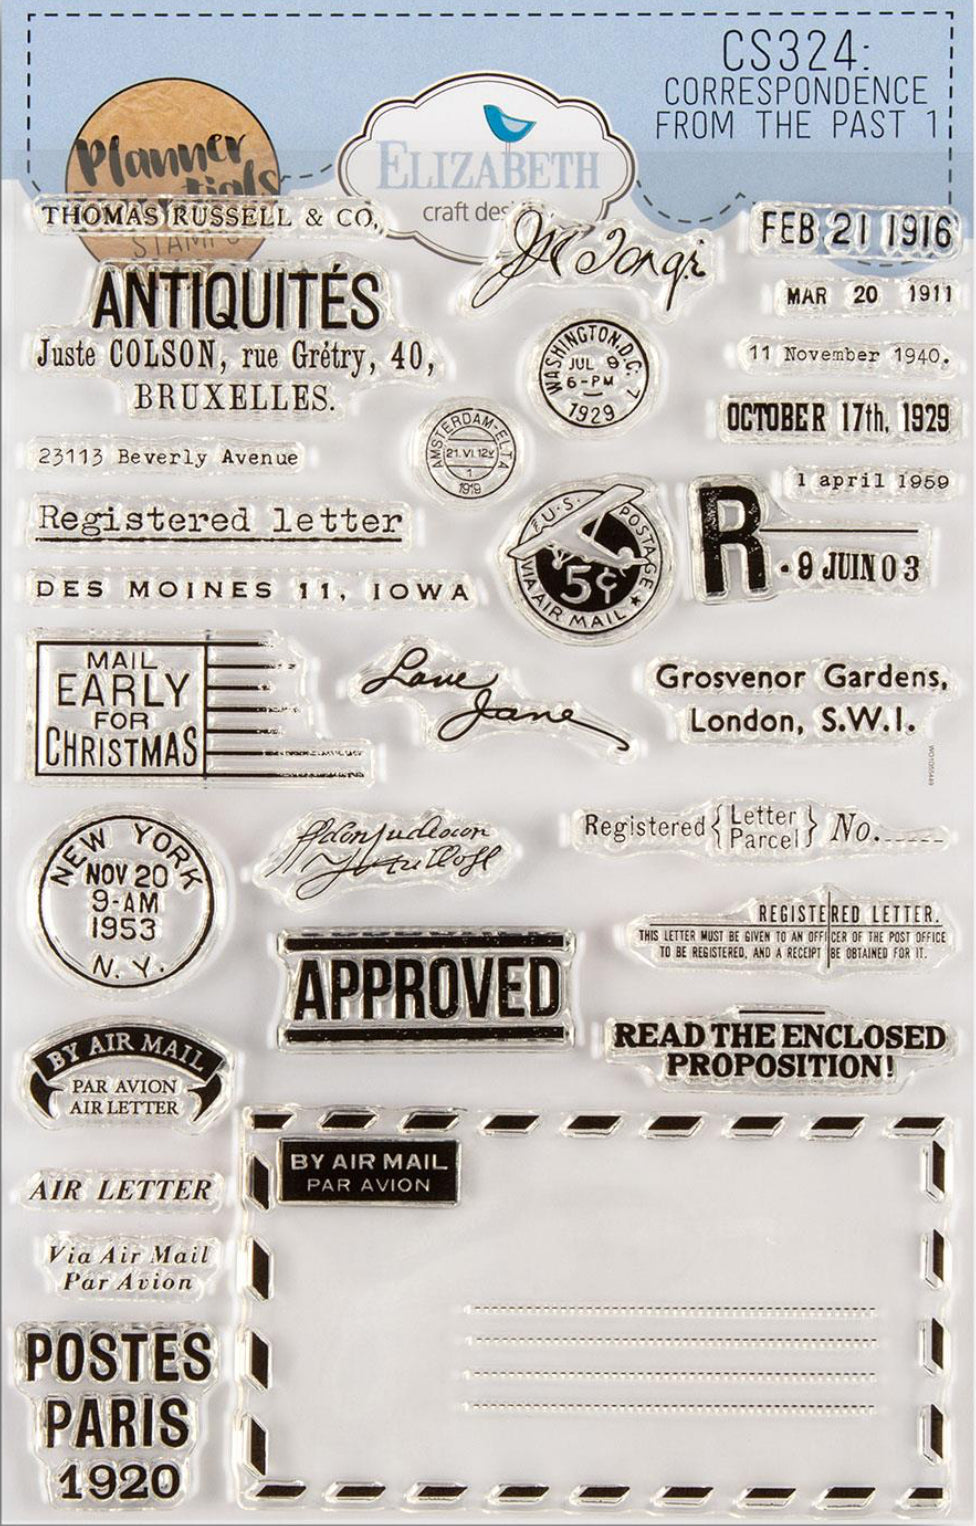 Elizabeth Craft Designs Correspondence From The Past 1 Stamp Set